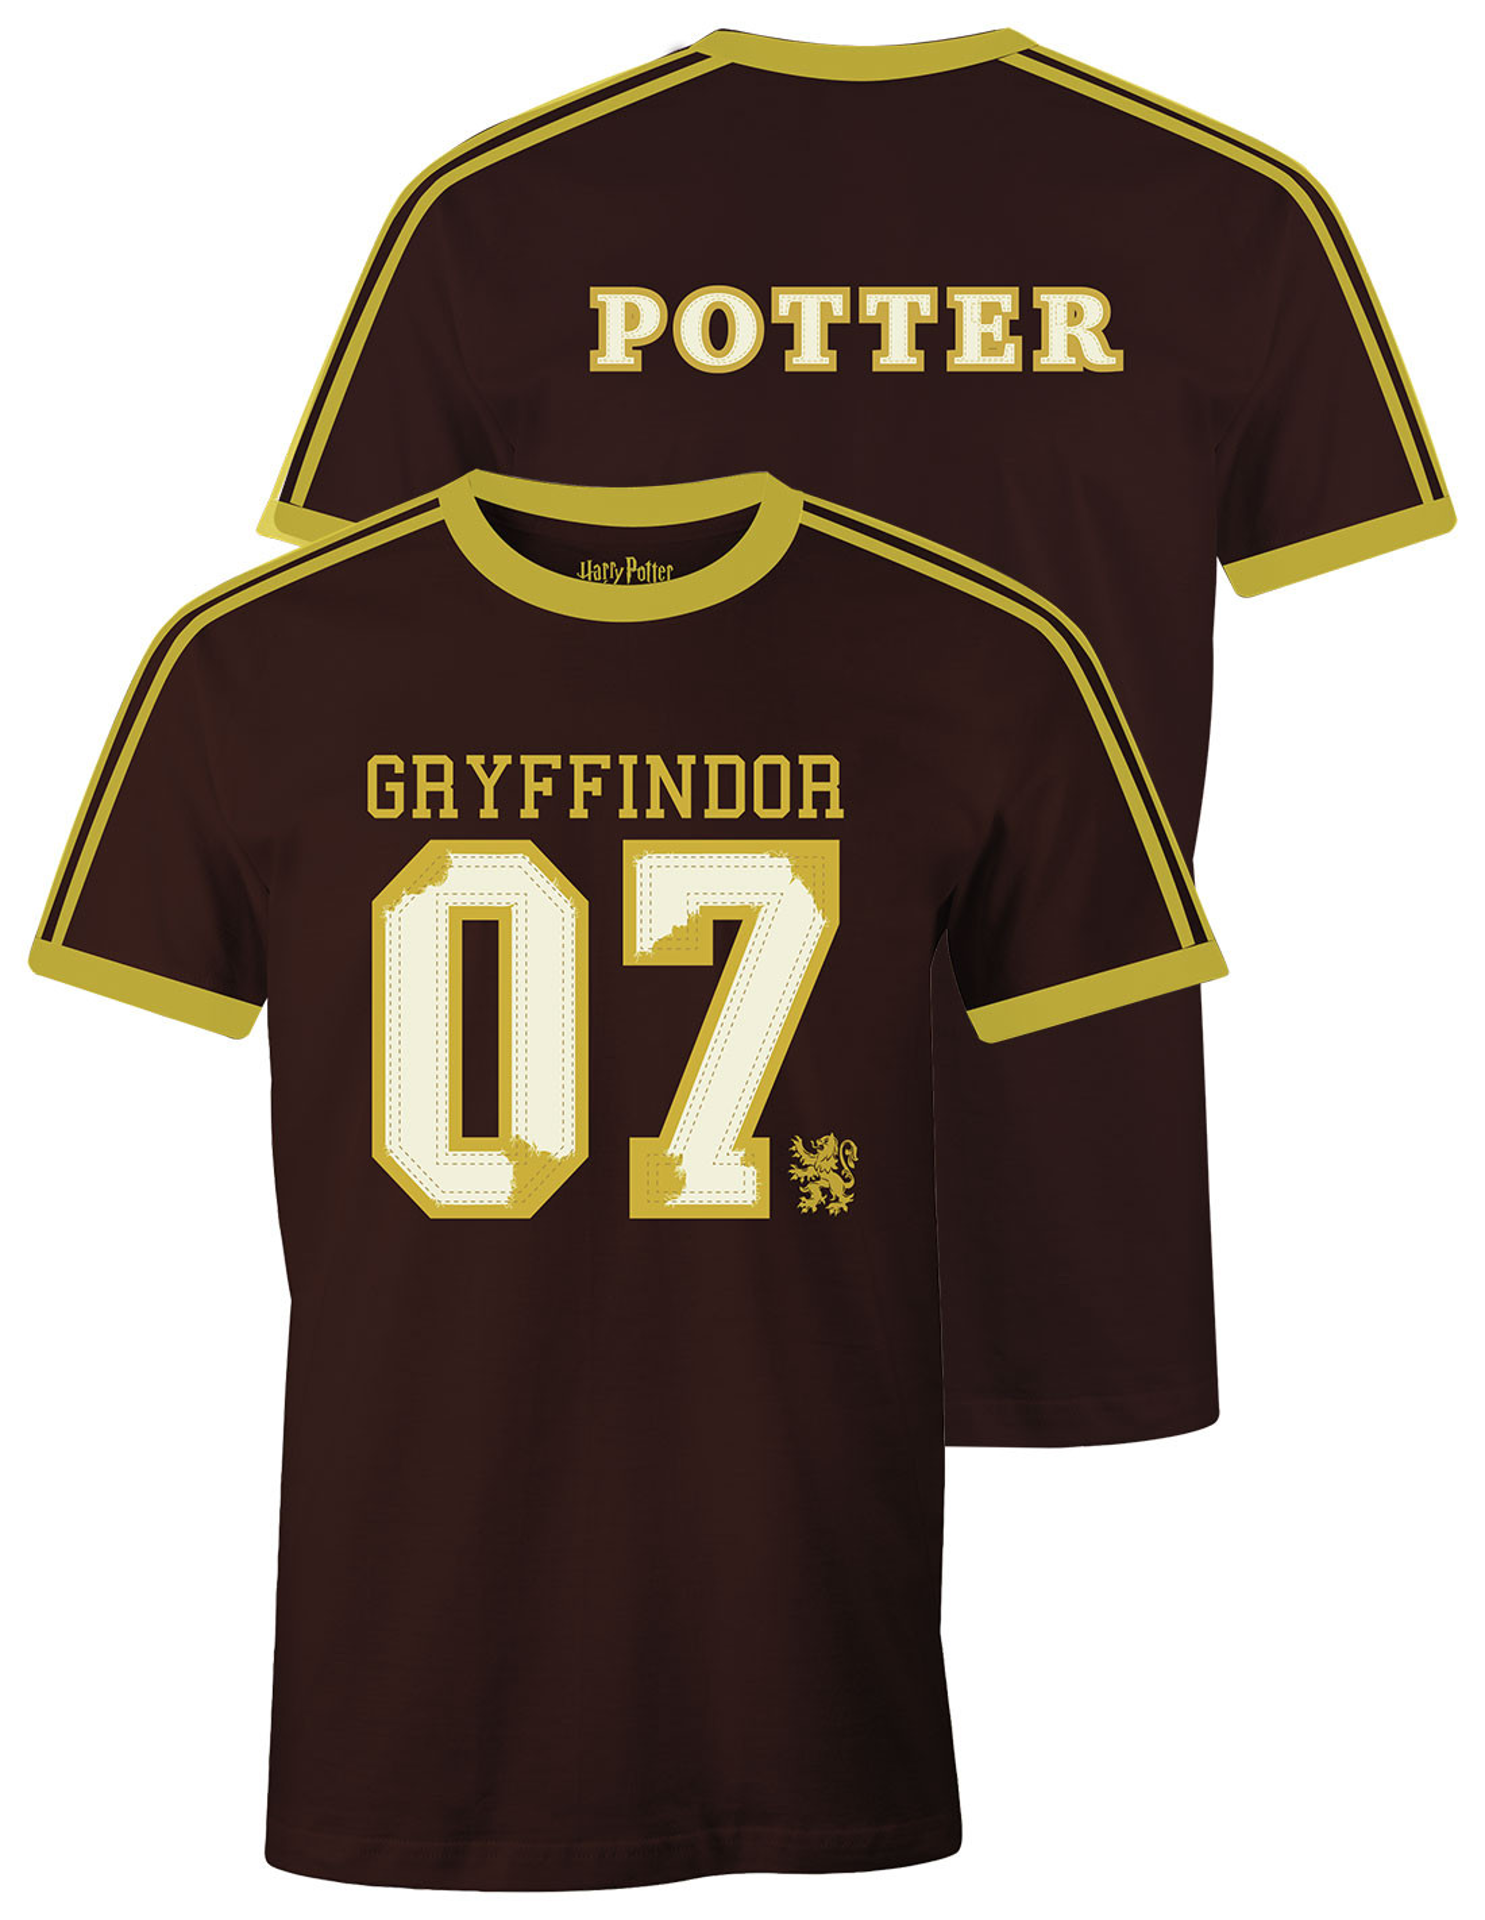 Harry Potter - T-Shirt Rouge Gryffondor Potter - S